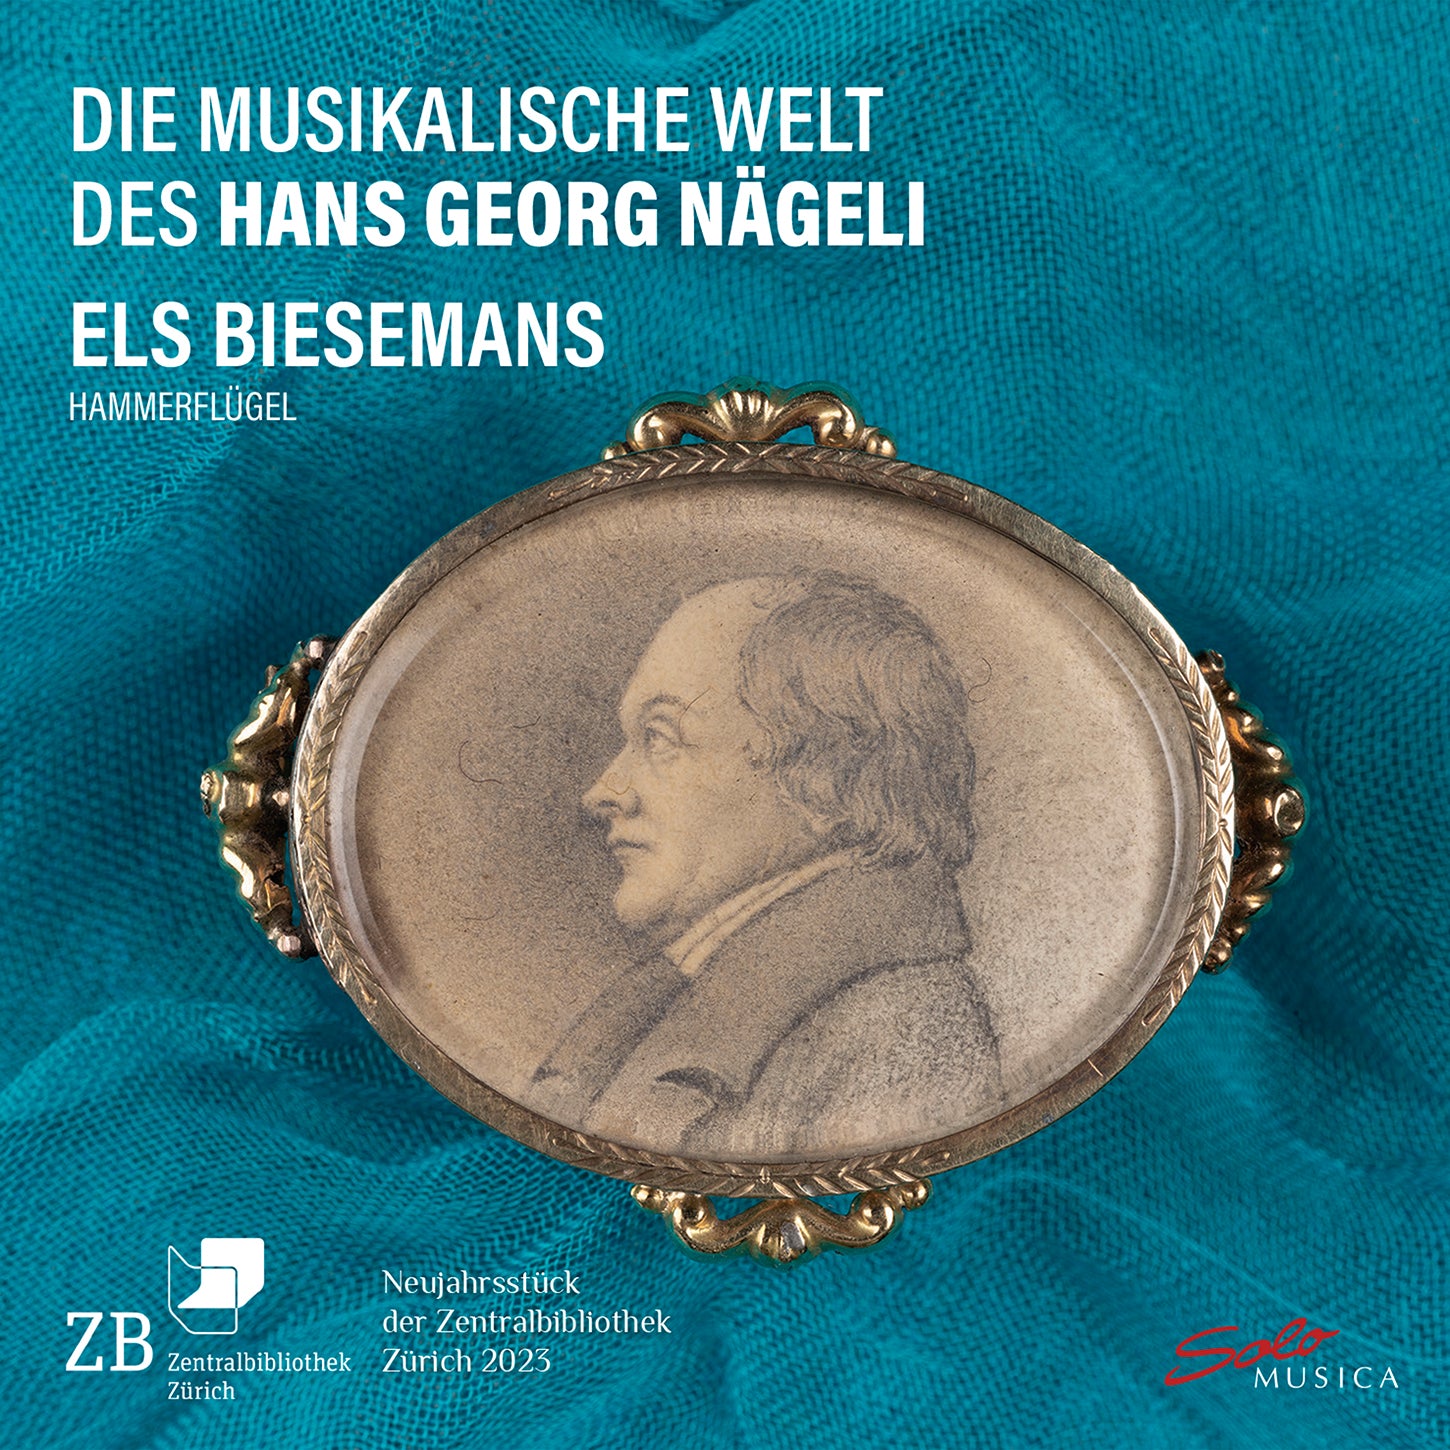 Beethoven, Clementi & Nageli: Hans Georg Nageli's World / Biesemans